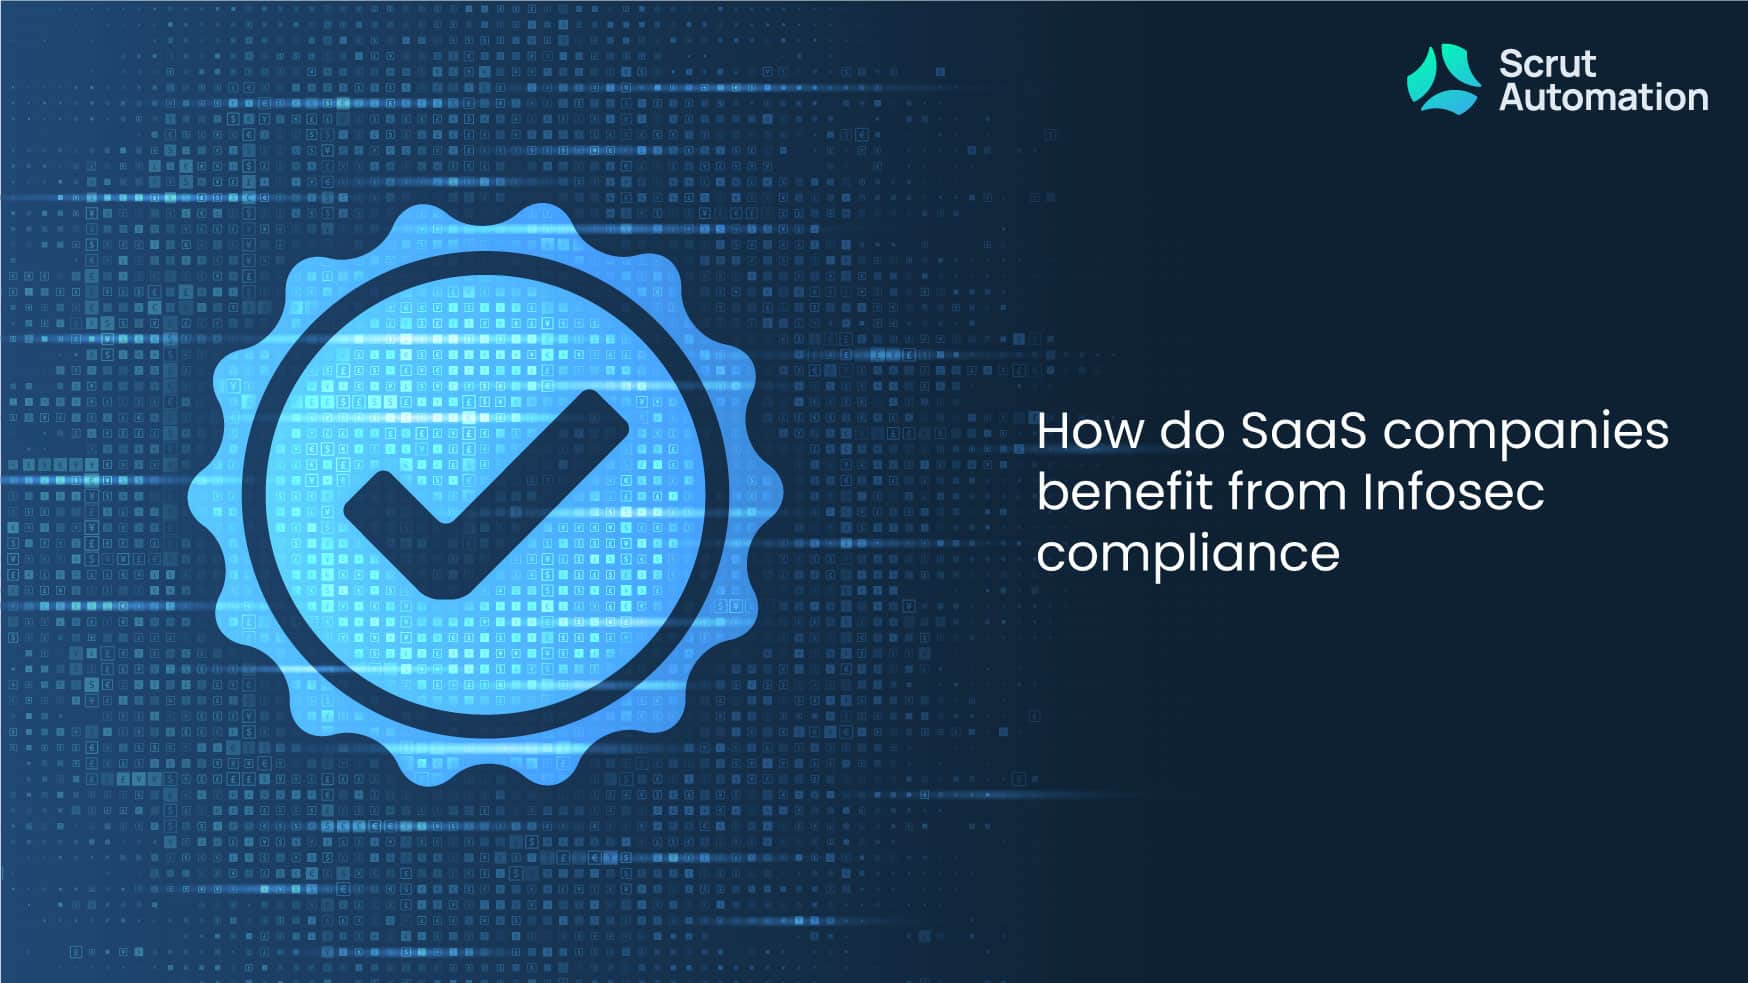 How does infosec compliance help SaaS companies?